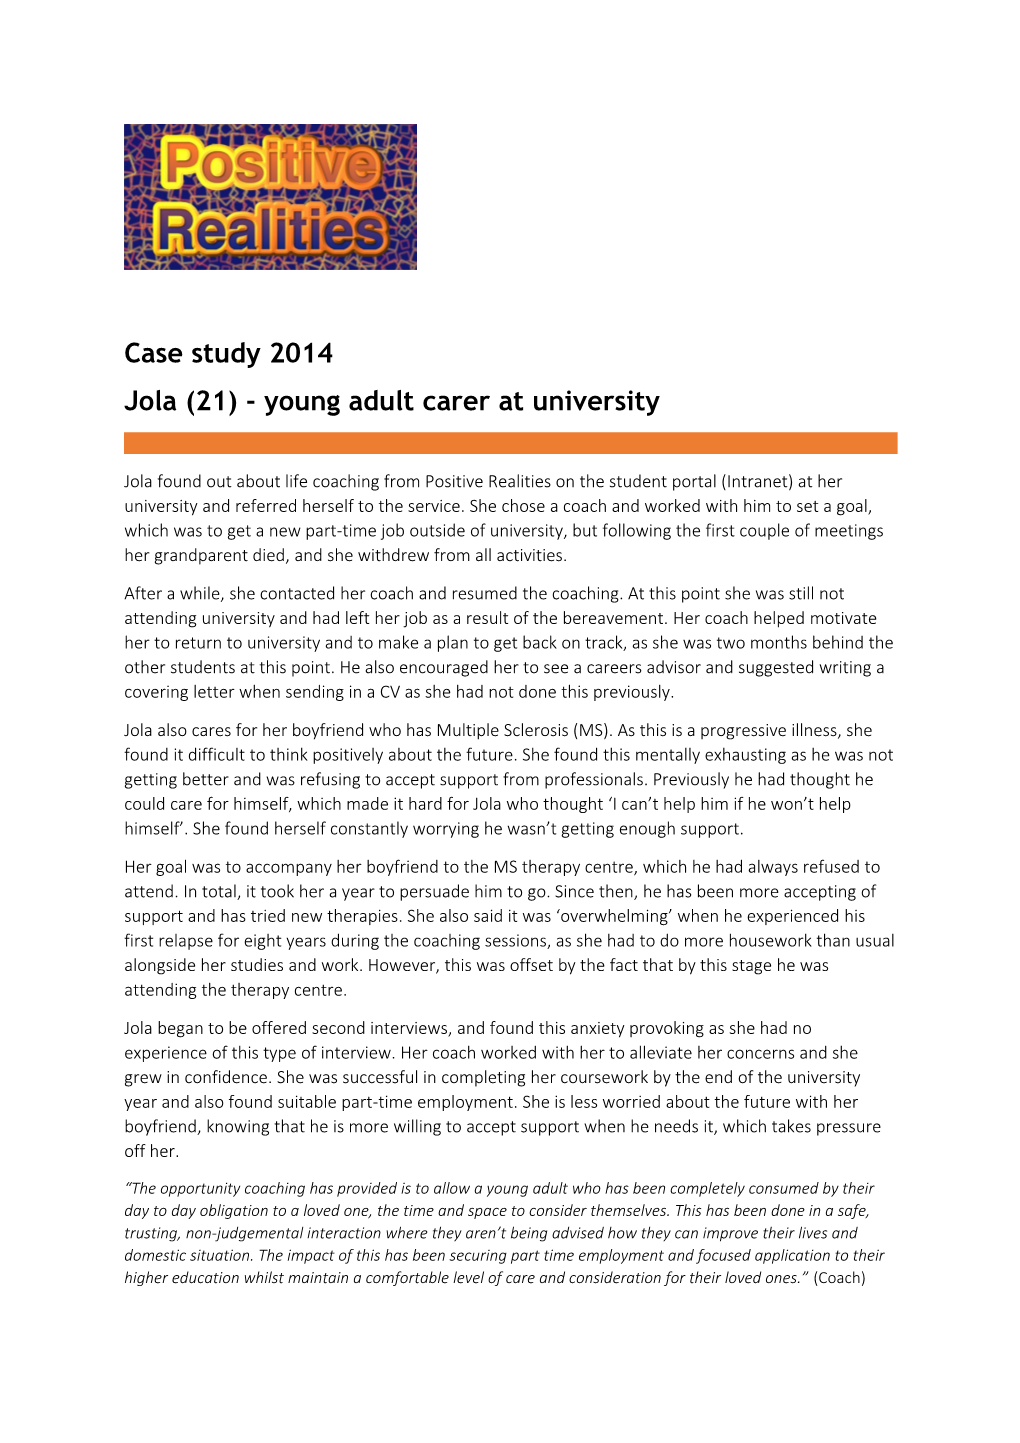 Jola (21) - Young Adult Carer at University